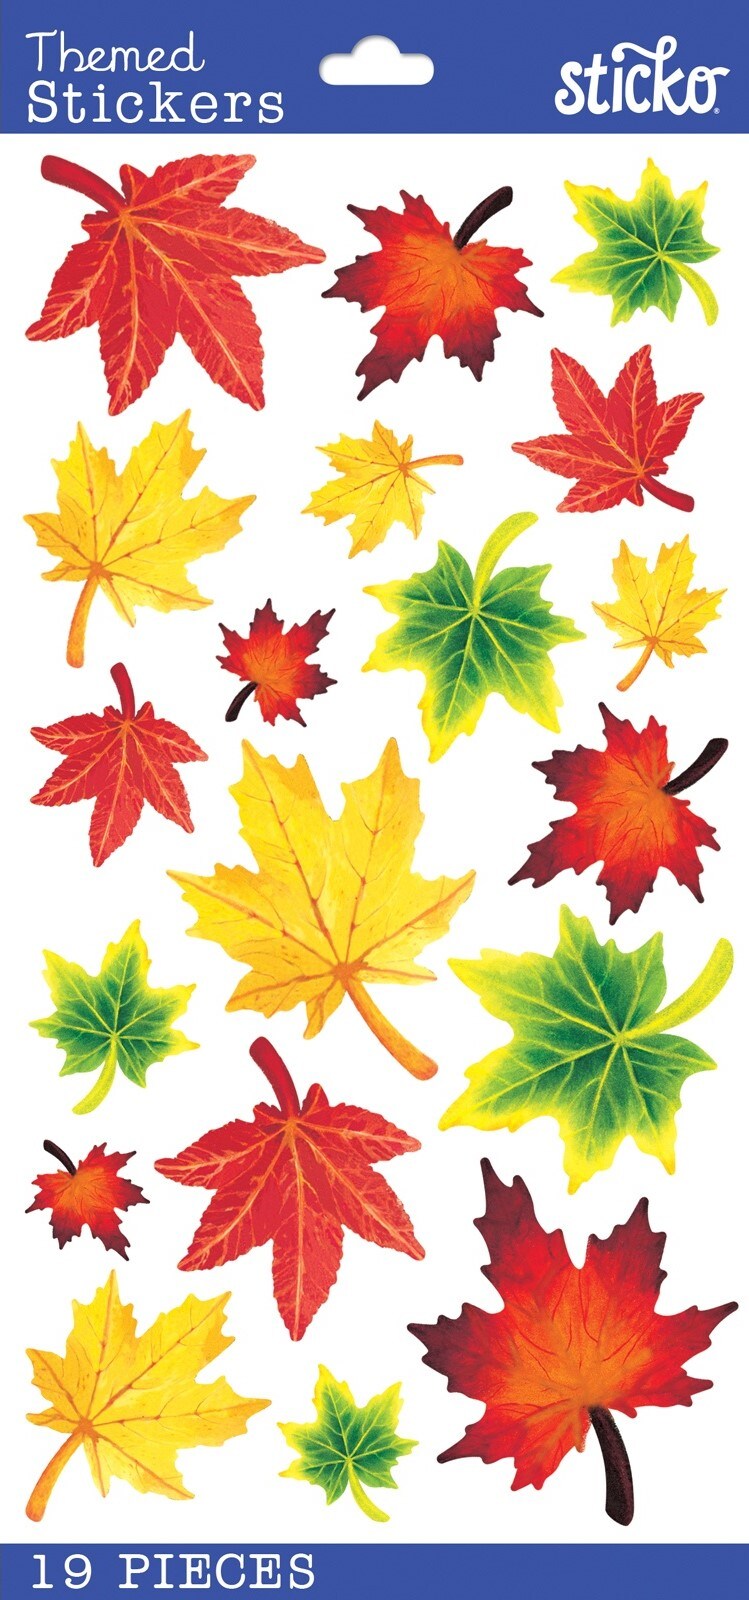 Sticko Vellum Maple Leaves Stickers